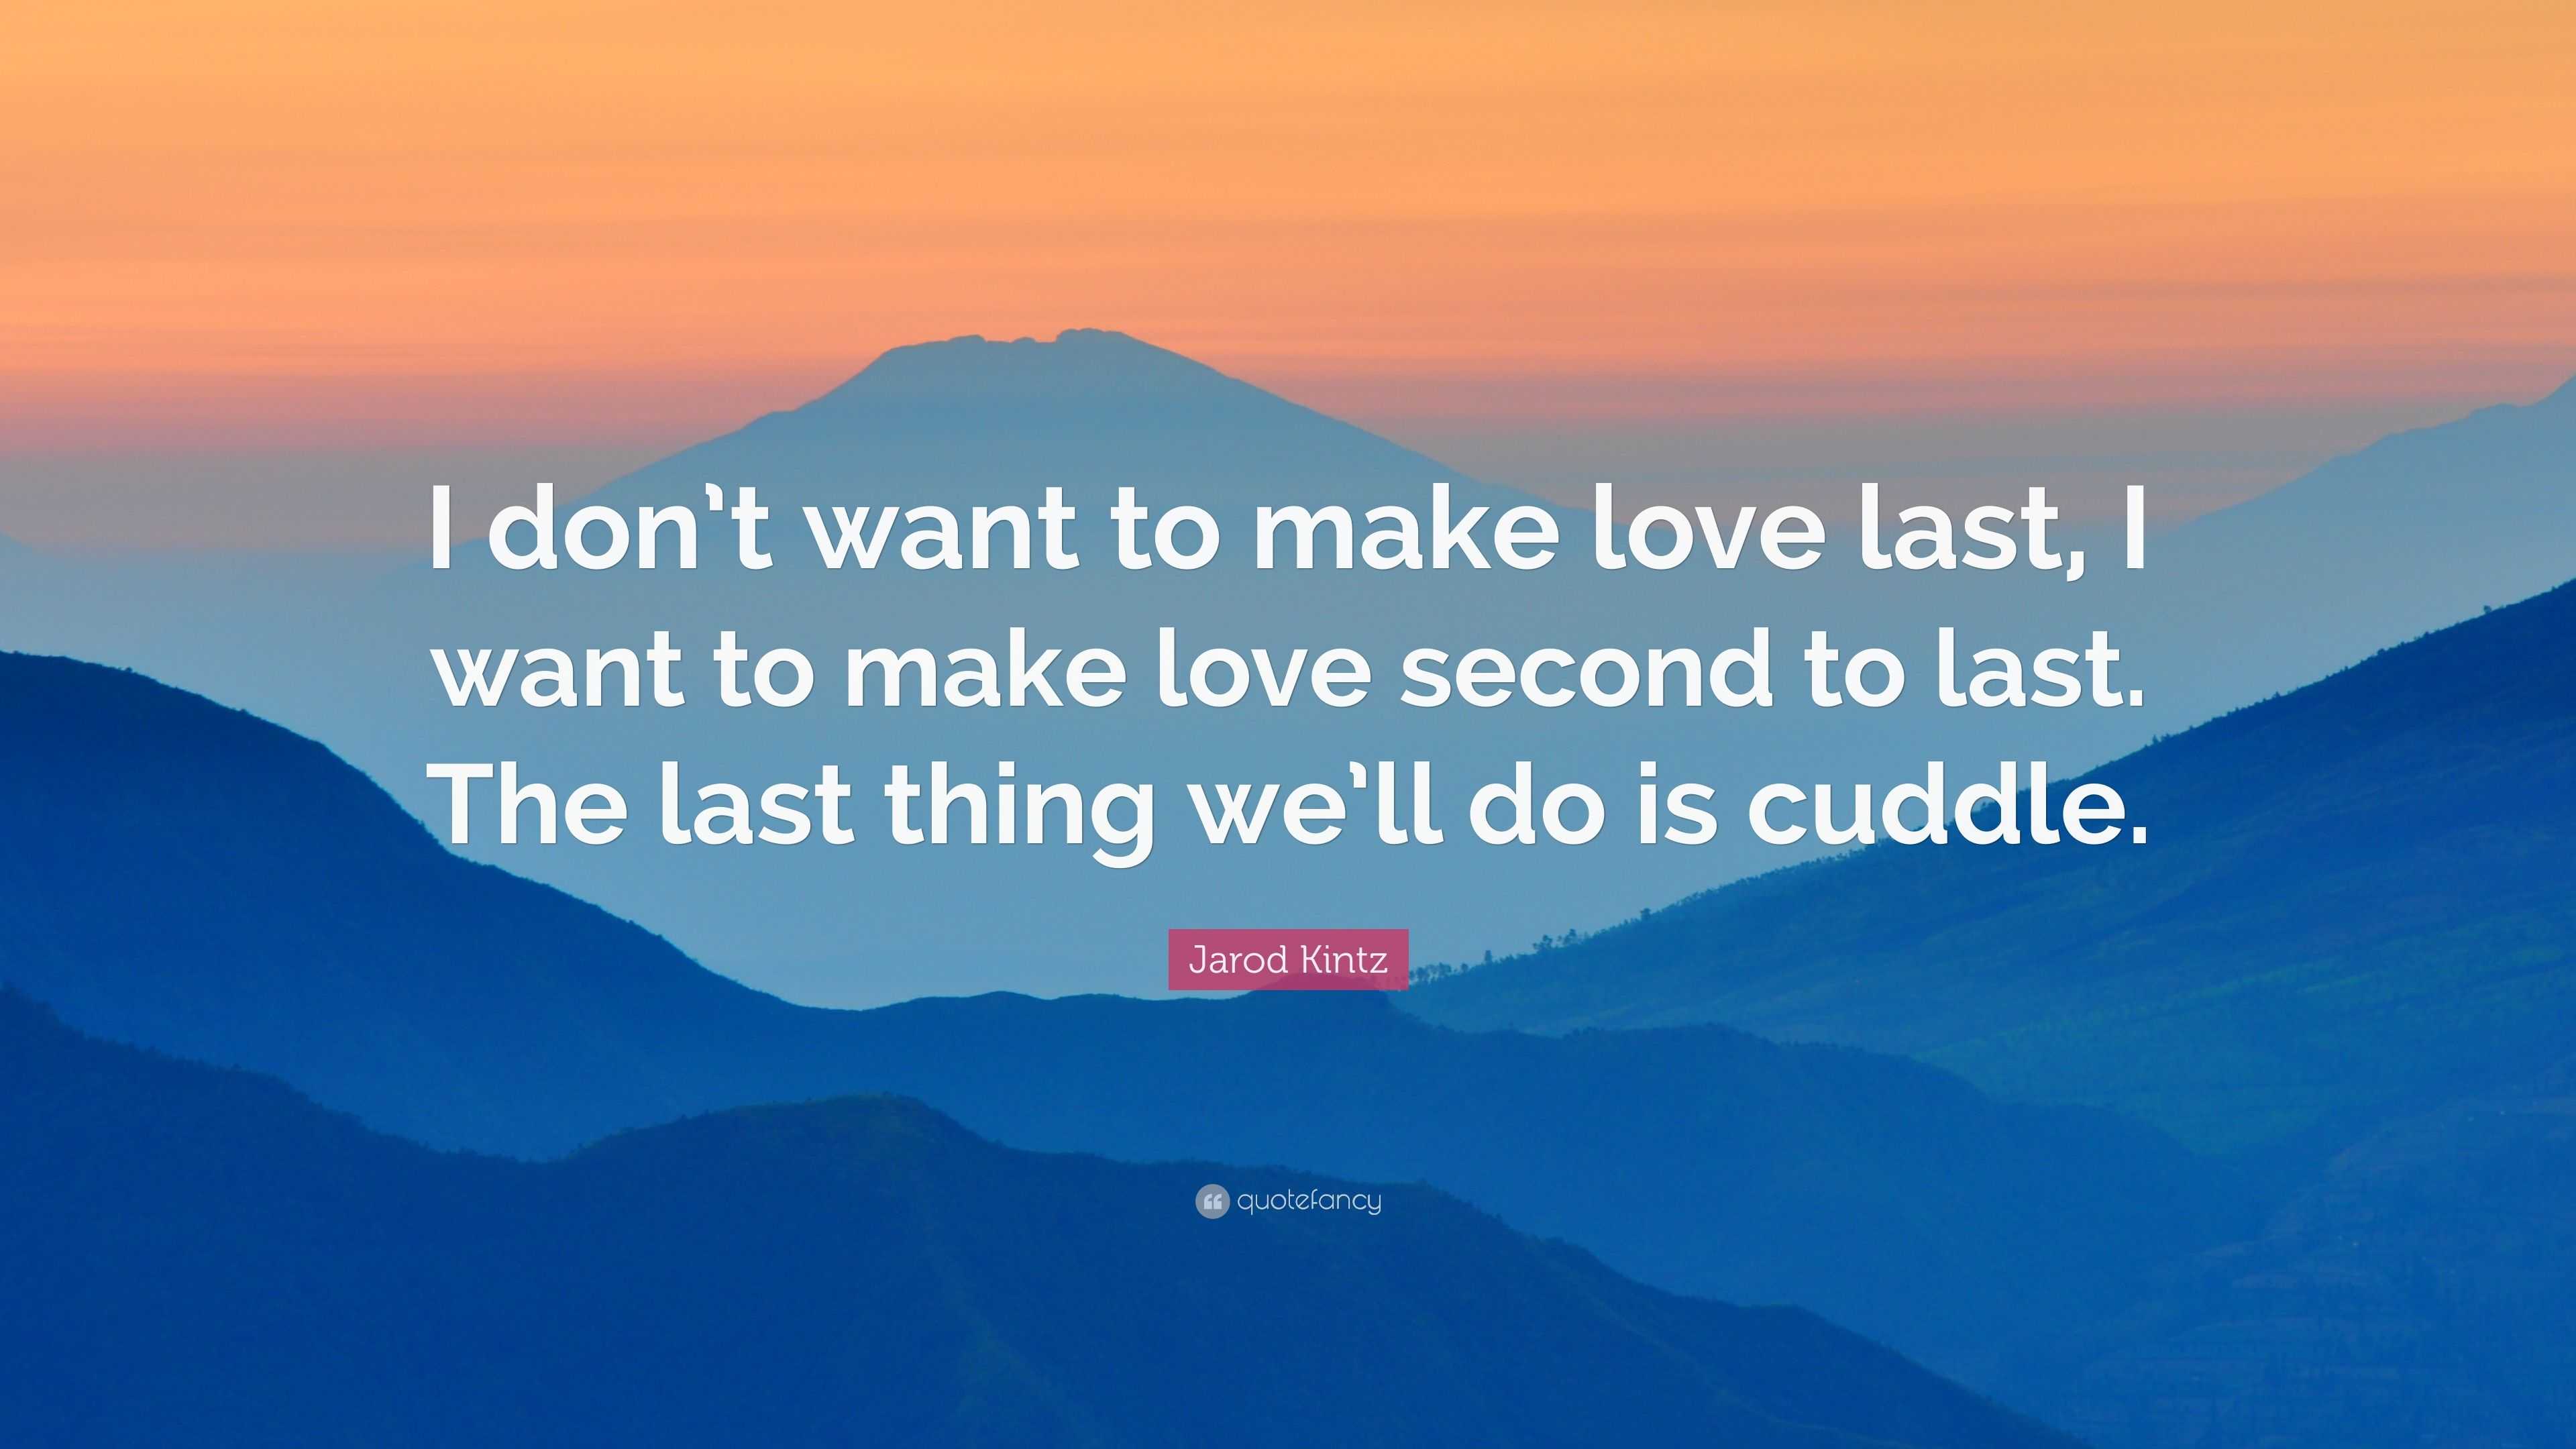 Jarod Kintz Quote “I don t want to make love last I